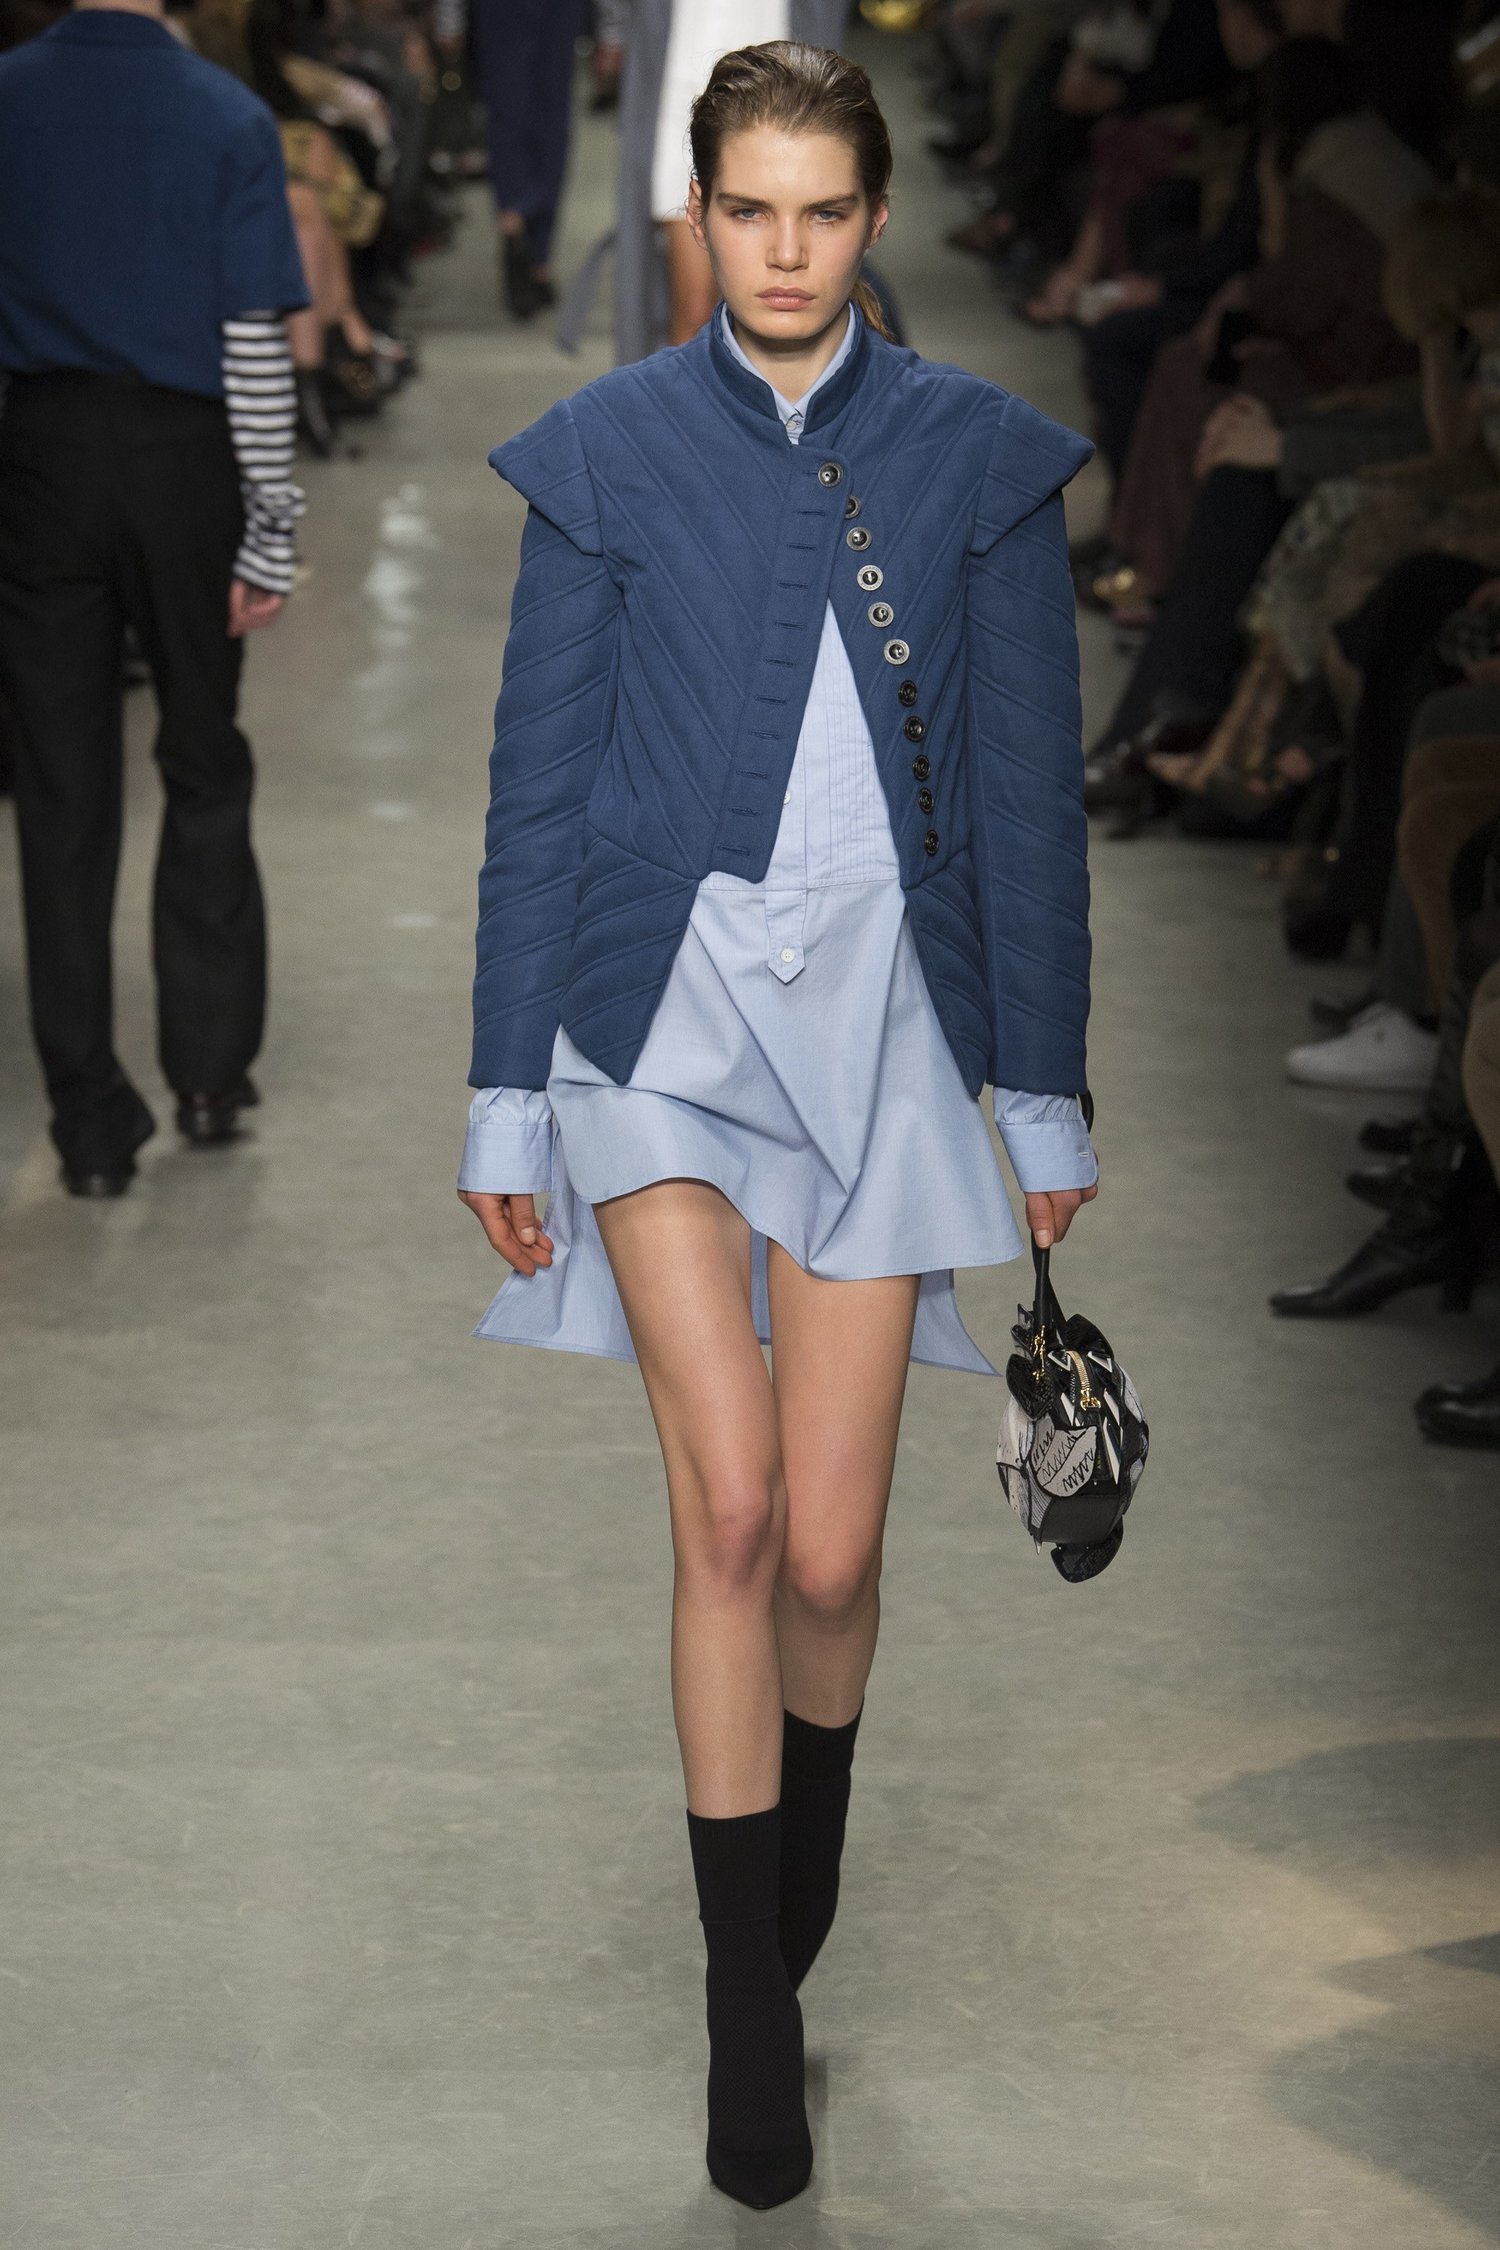 London Fashion Week: Hues of Blue — NYCSTYLIST | Wardrobe Styling ...